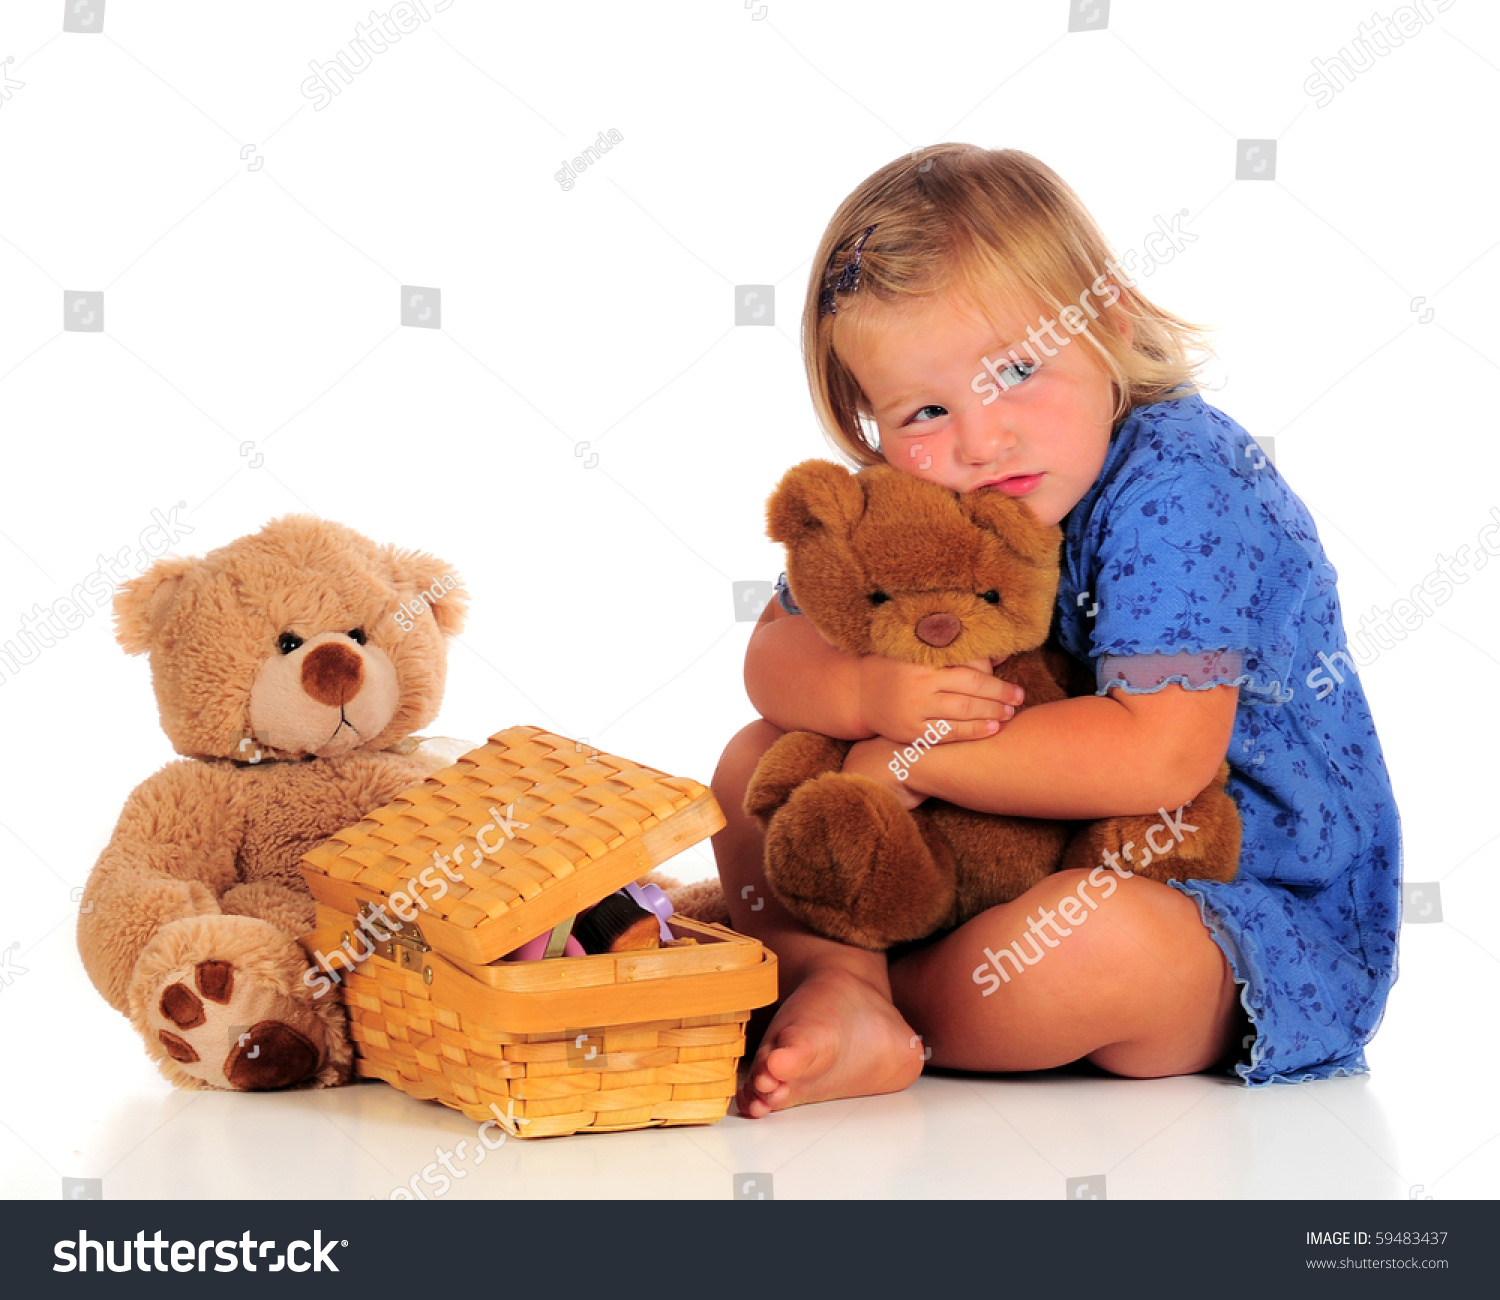 teddy bear for 2 year old